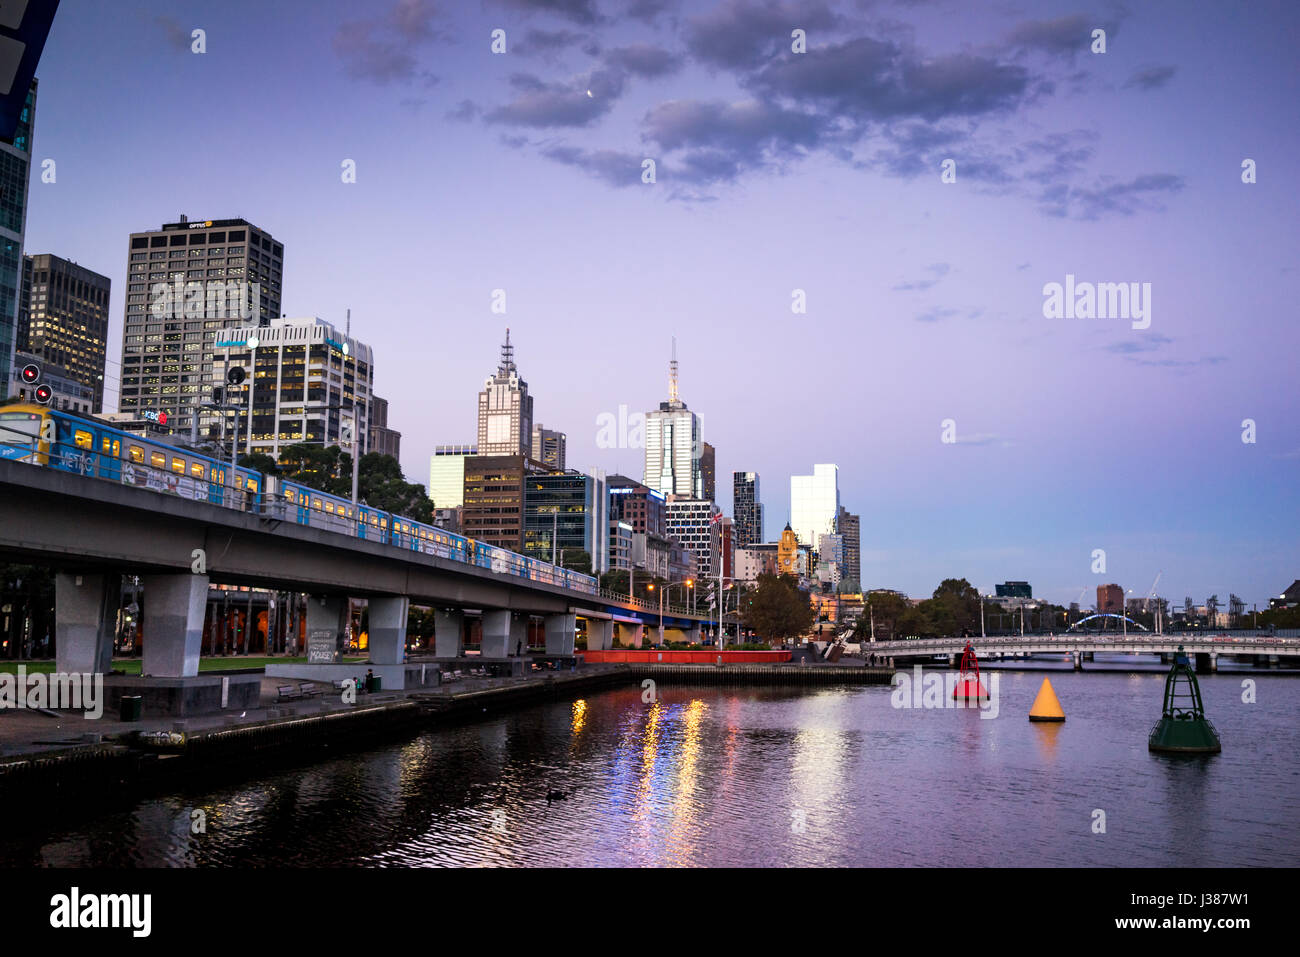 City scene from the Sea Life towards Queens Bridge over the river Yarra in Melbourne Australia Stock Photo